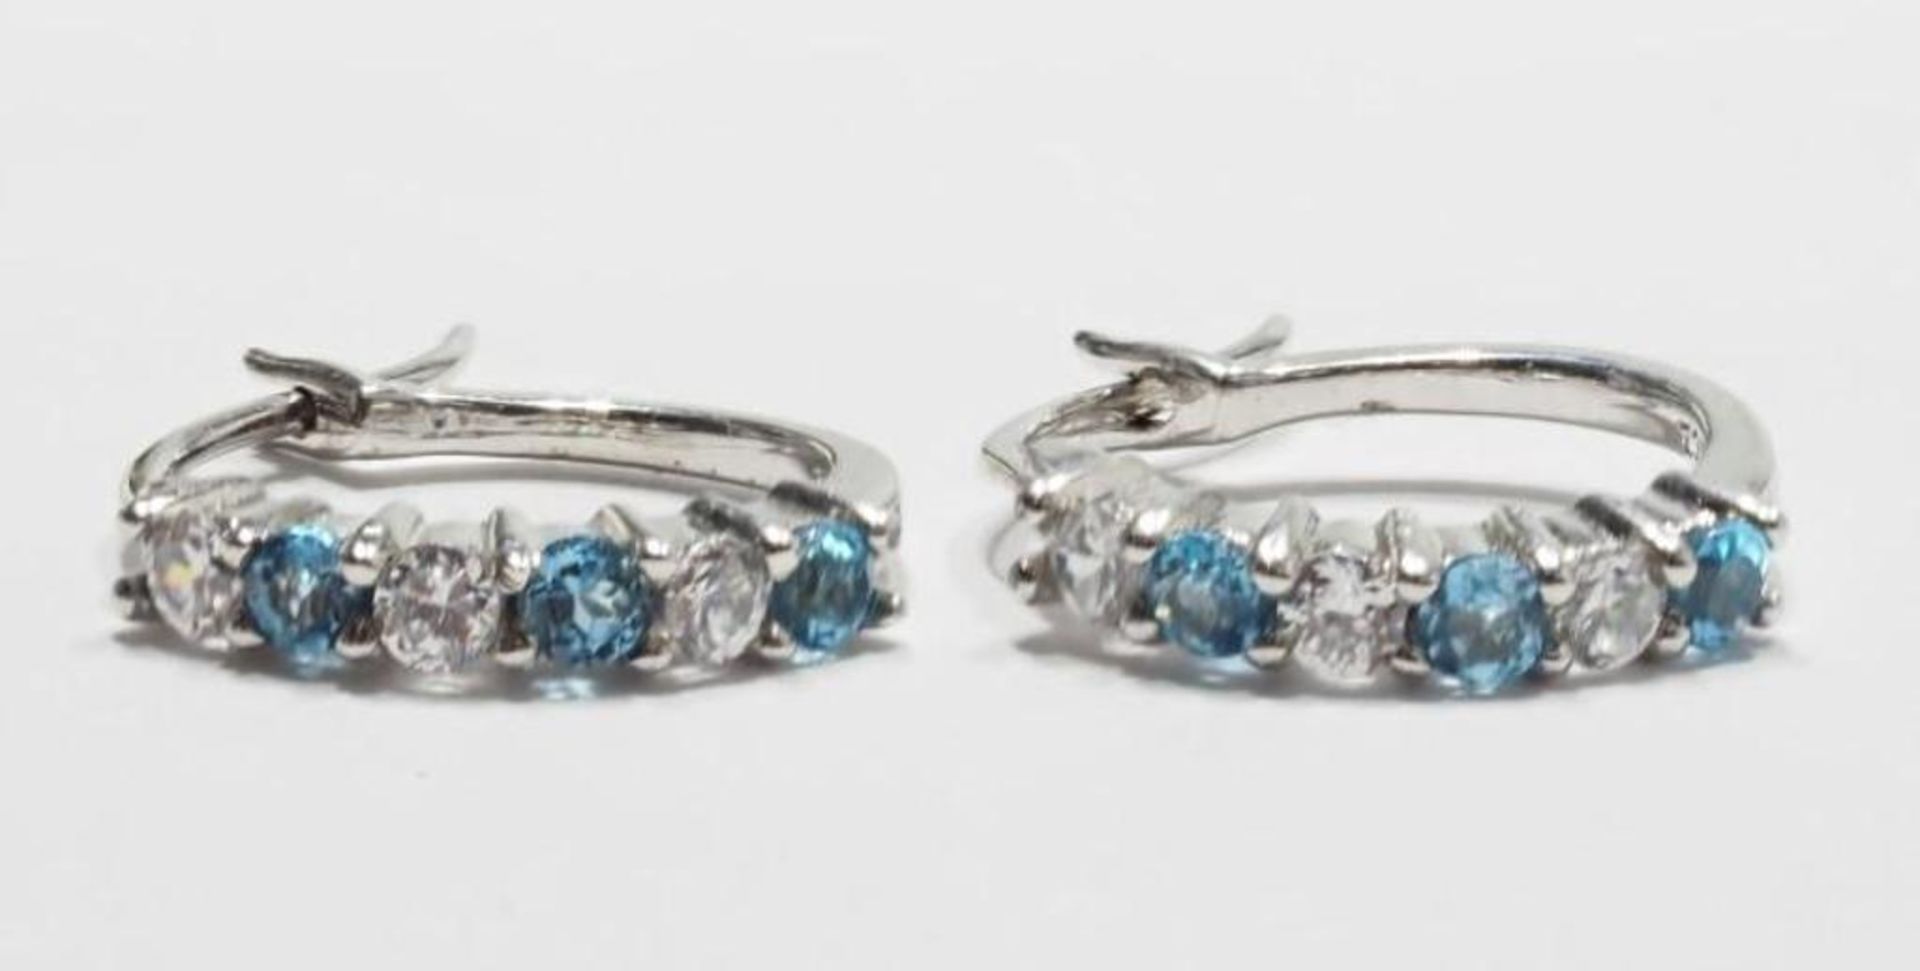 2 Sterling Silver Citrine and Topaz Earrings (Birthstone Nov & Dec) Retail $200 - Image 2 of 3